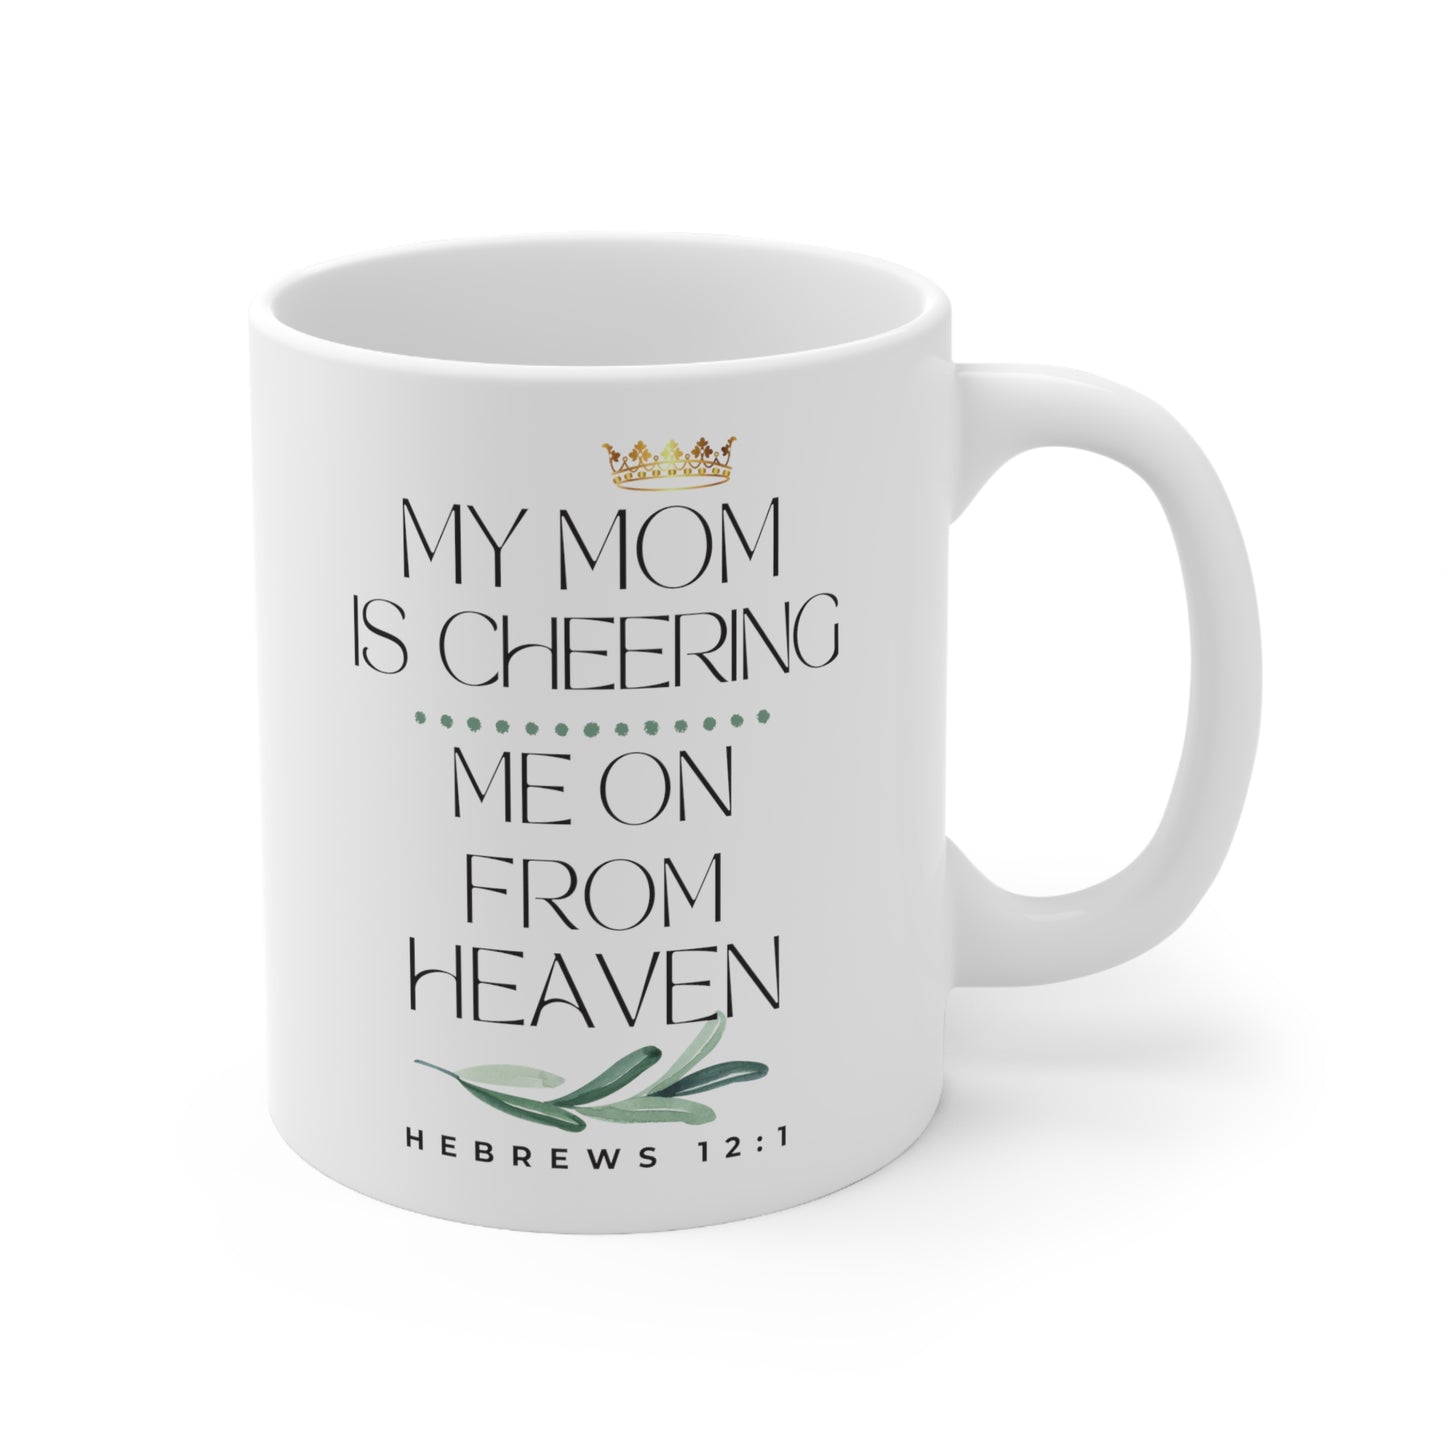 Mom Memorial Gift Mug, Cheering Me on from Heaven